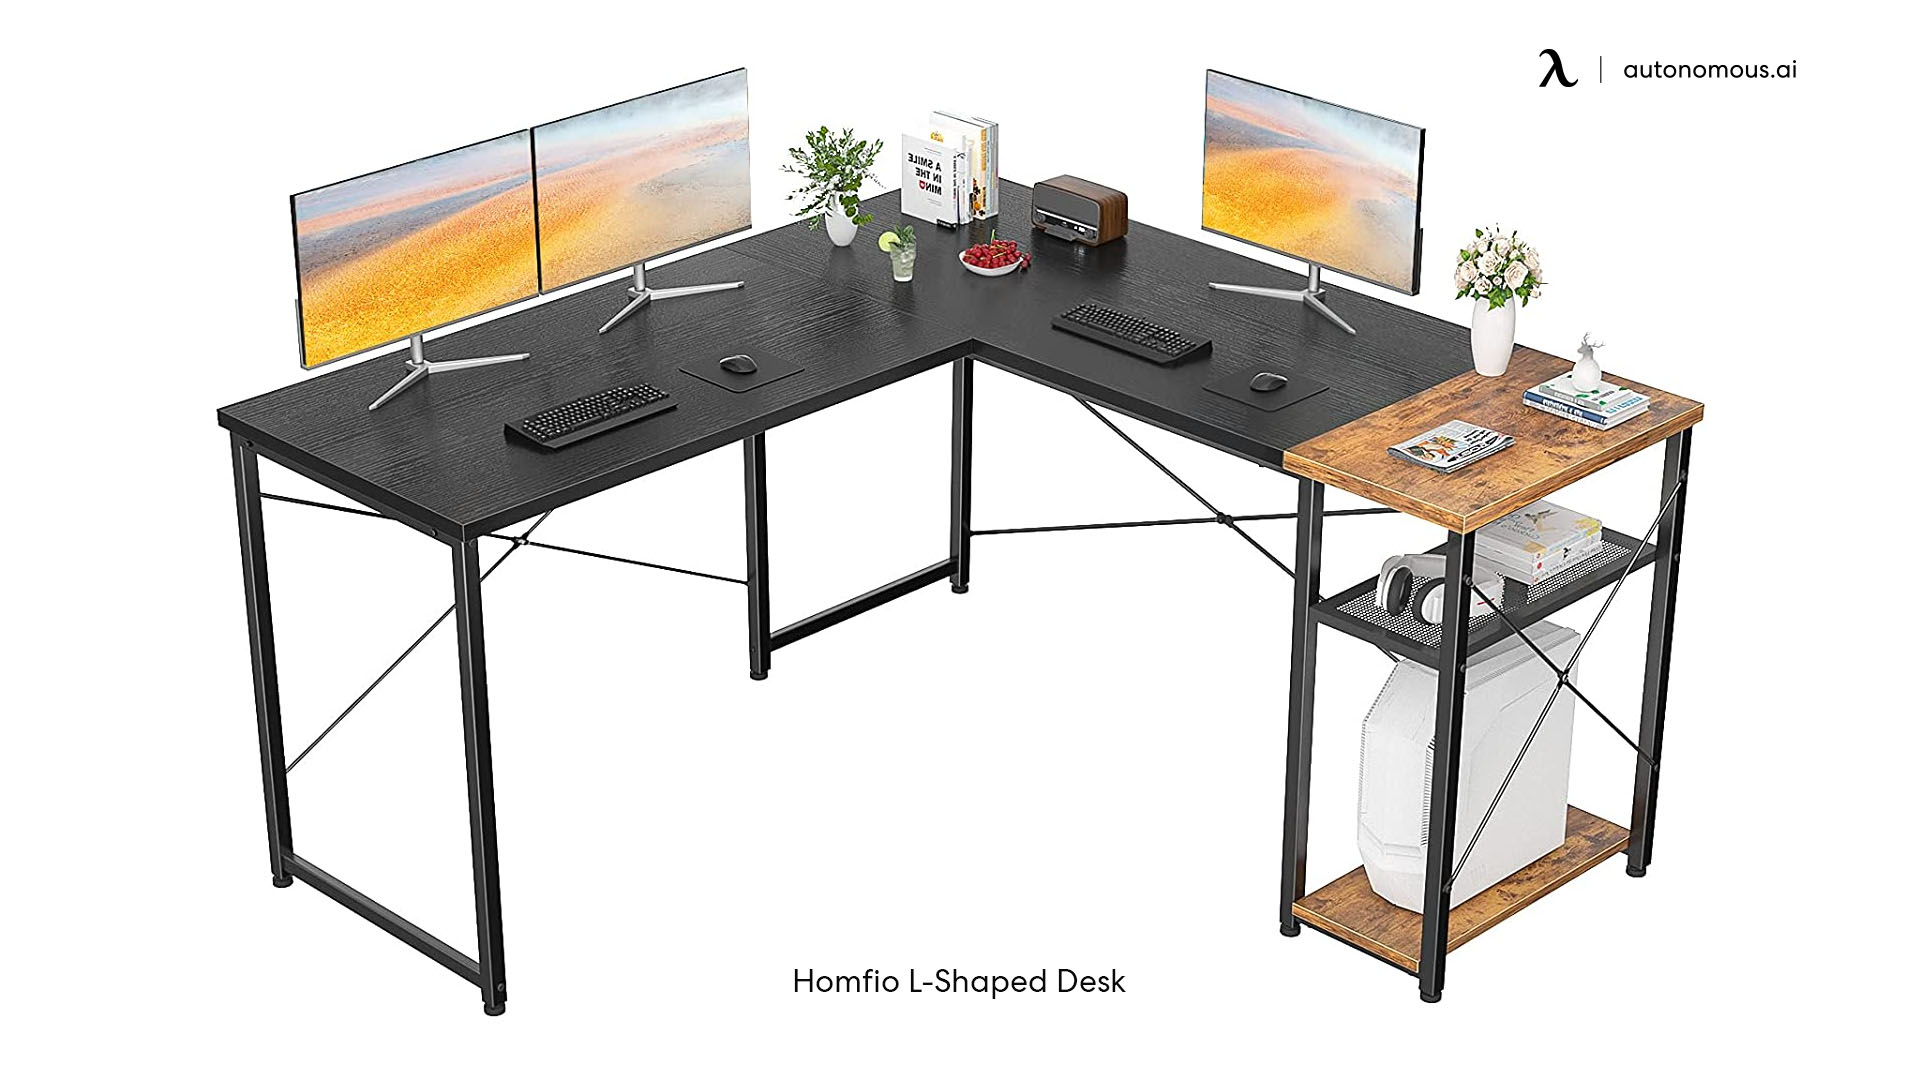 Homfio L-Shaped Desk